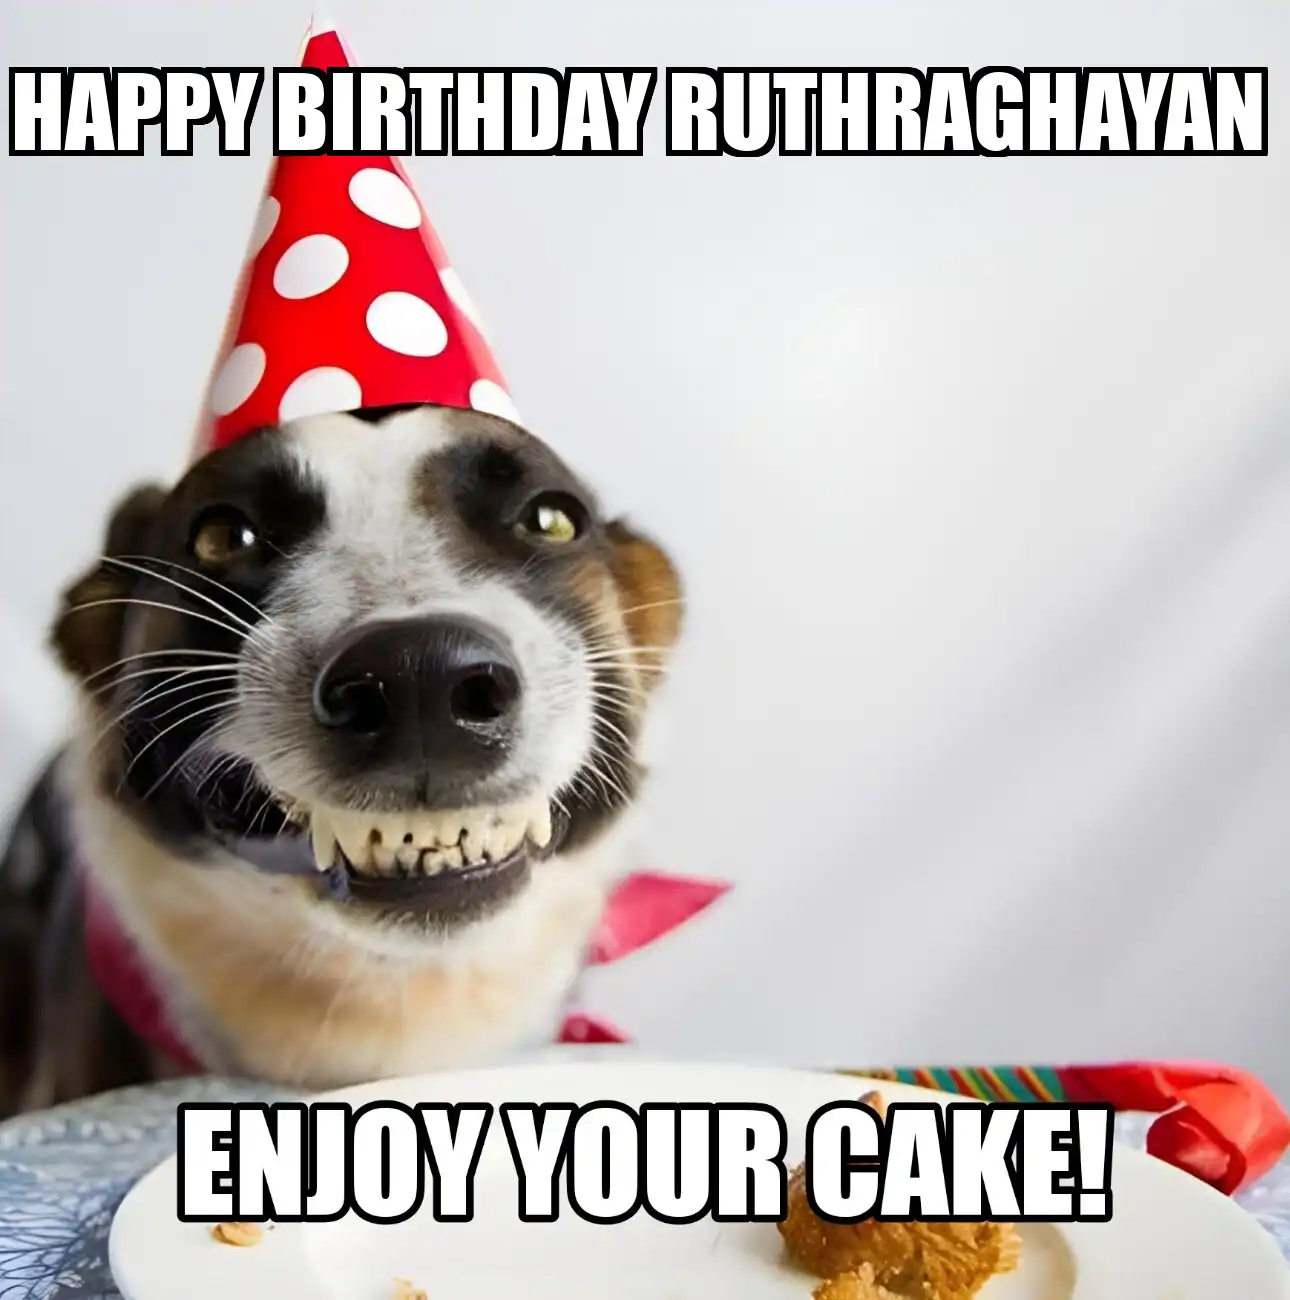 Happy Birthday Ruthraghayan Enjoy Your Cake Dog Meme